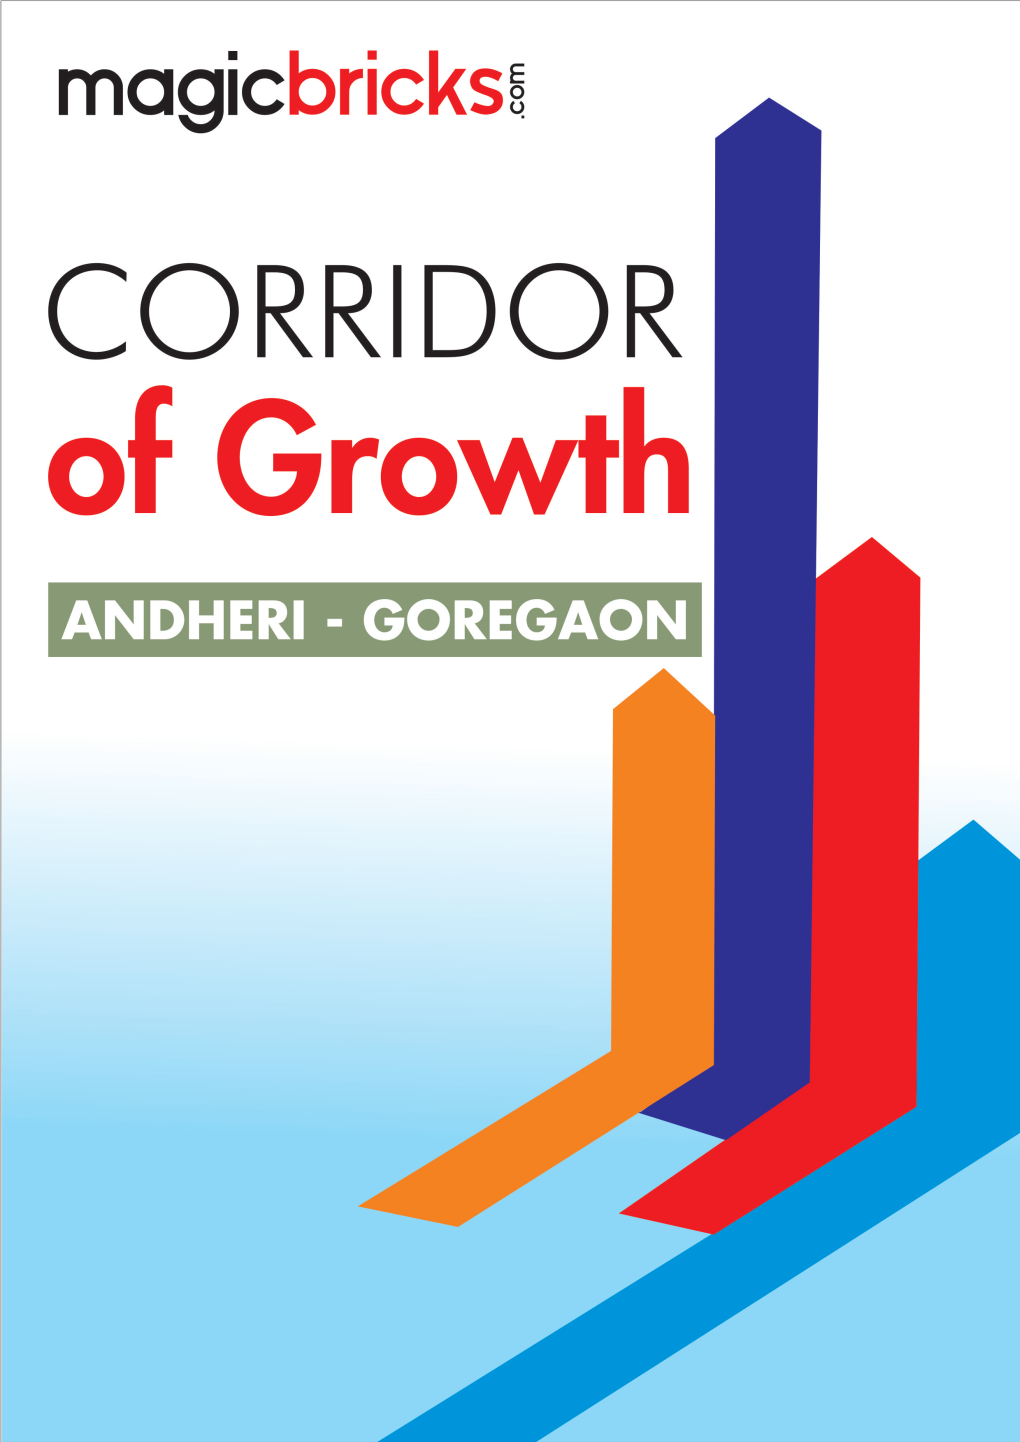 ANDHERI - GOREGAON Corridor Description and Rating Areas Included: Andheri (West), Goregaon (West), Andheri (East) and Goregaon (East)